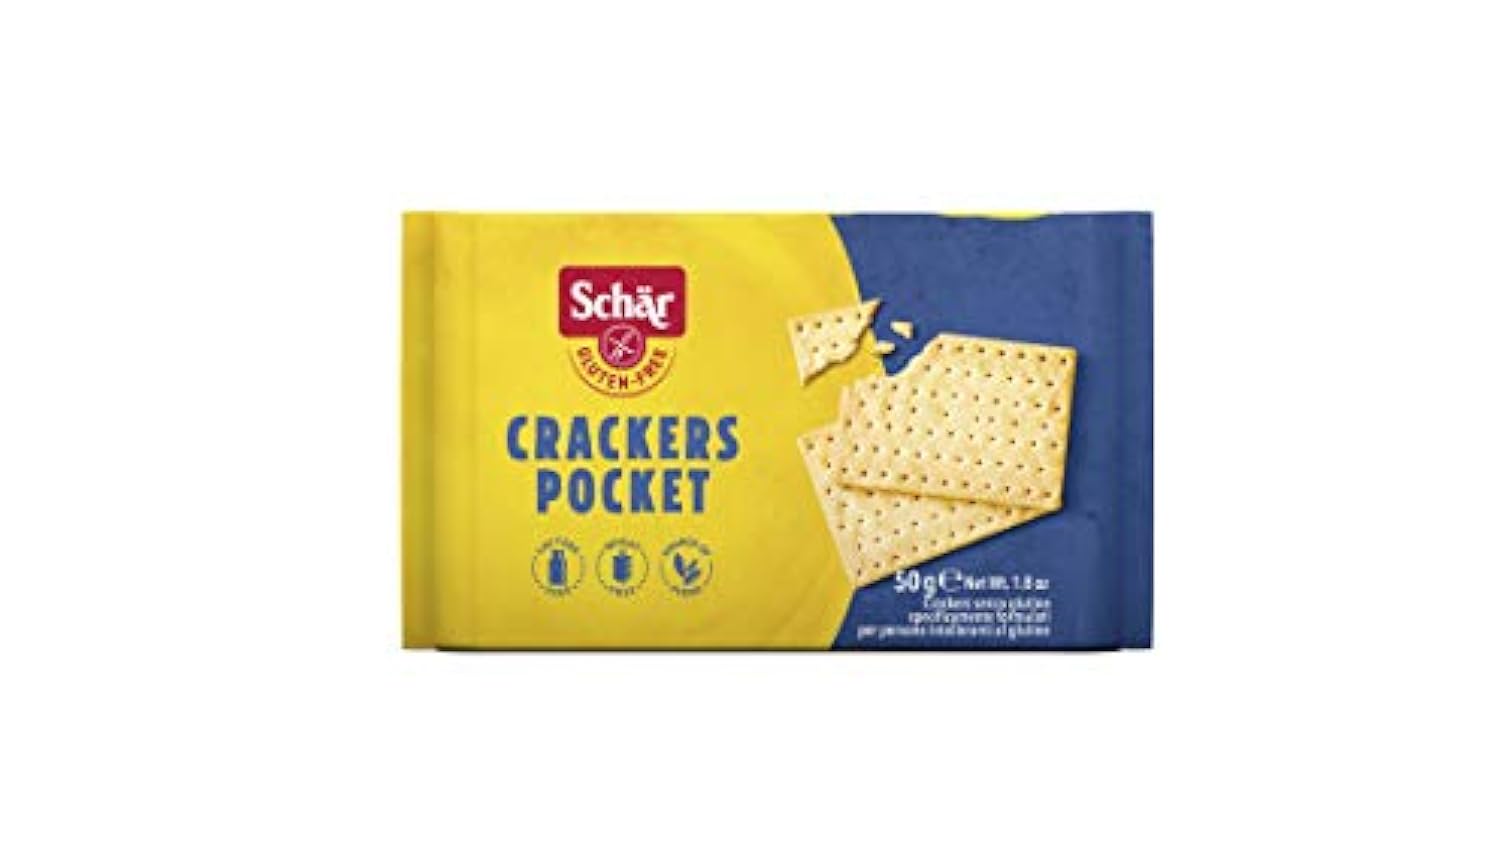 Schär Crackers Pocket sans gluten 150 g (3 x 50 g) llWm